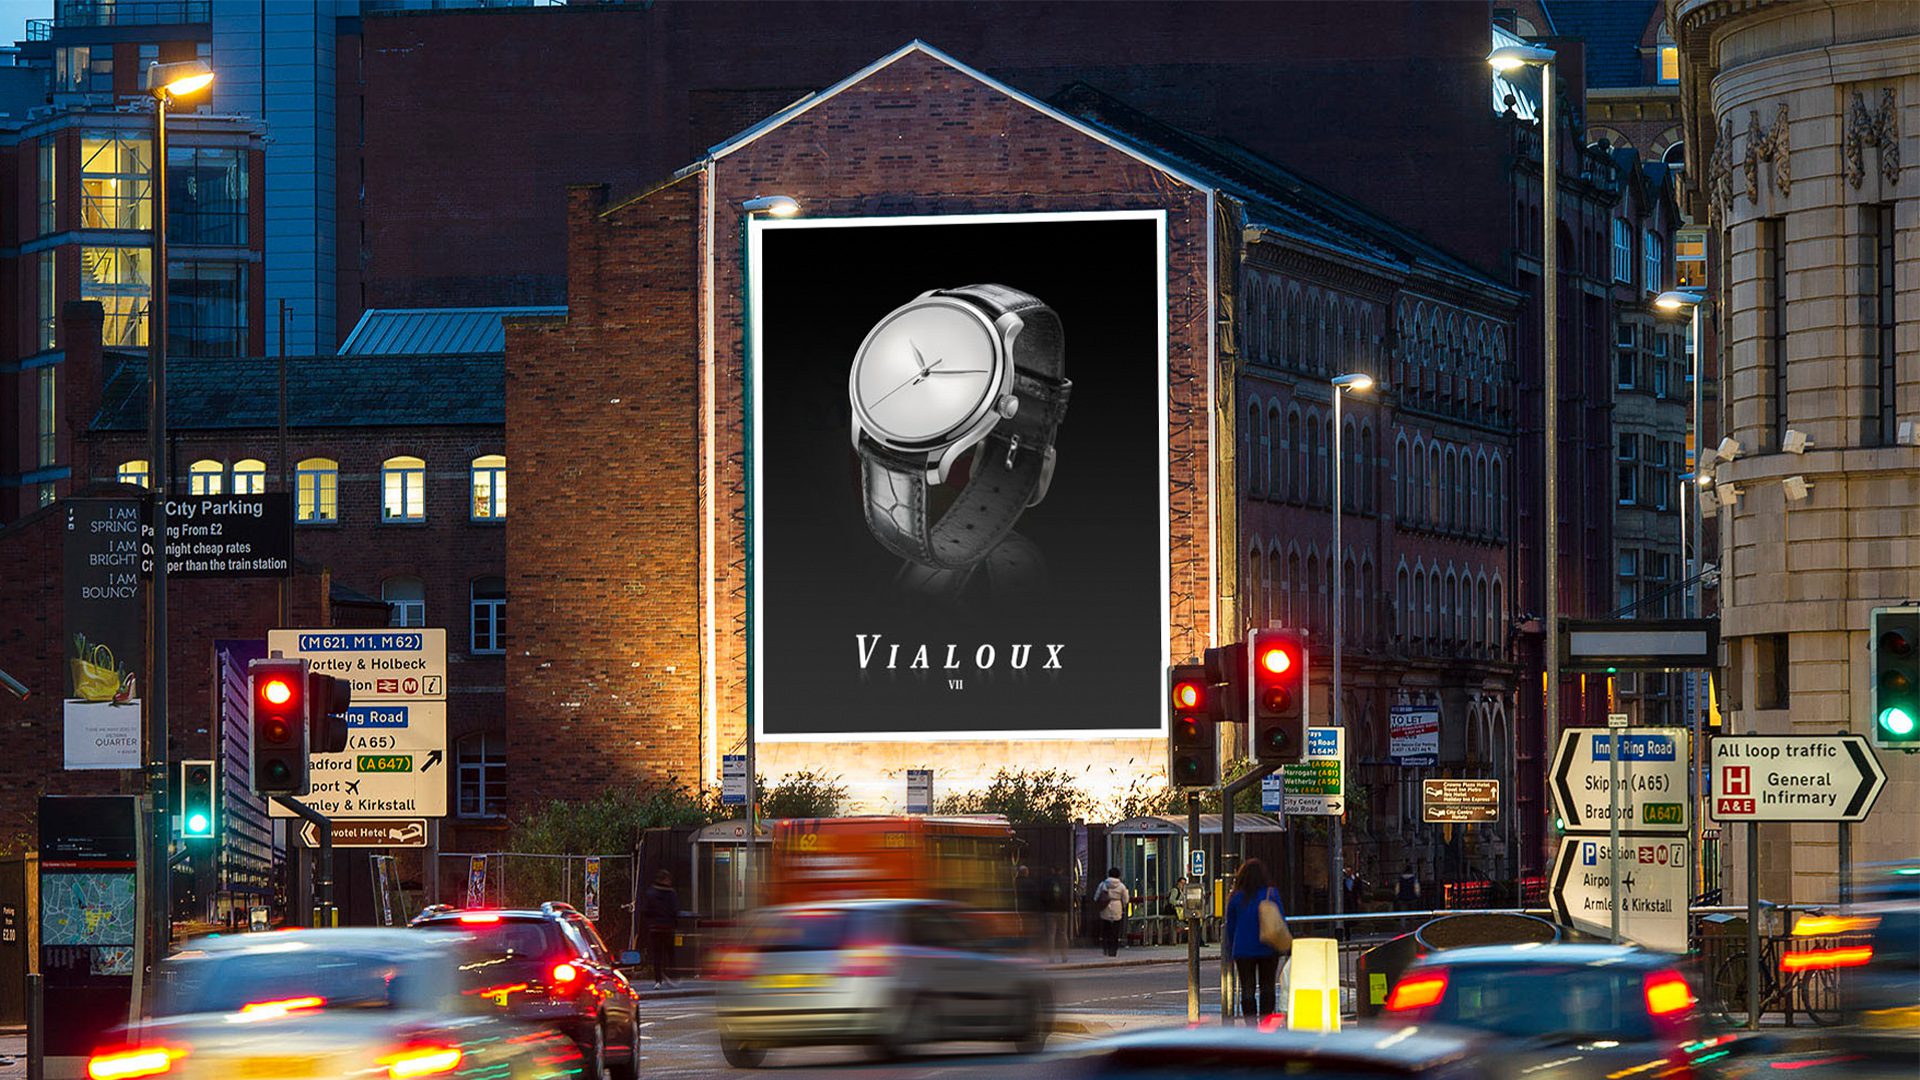 vialoux-watch_leeds_city-square_02